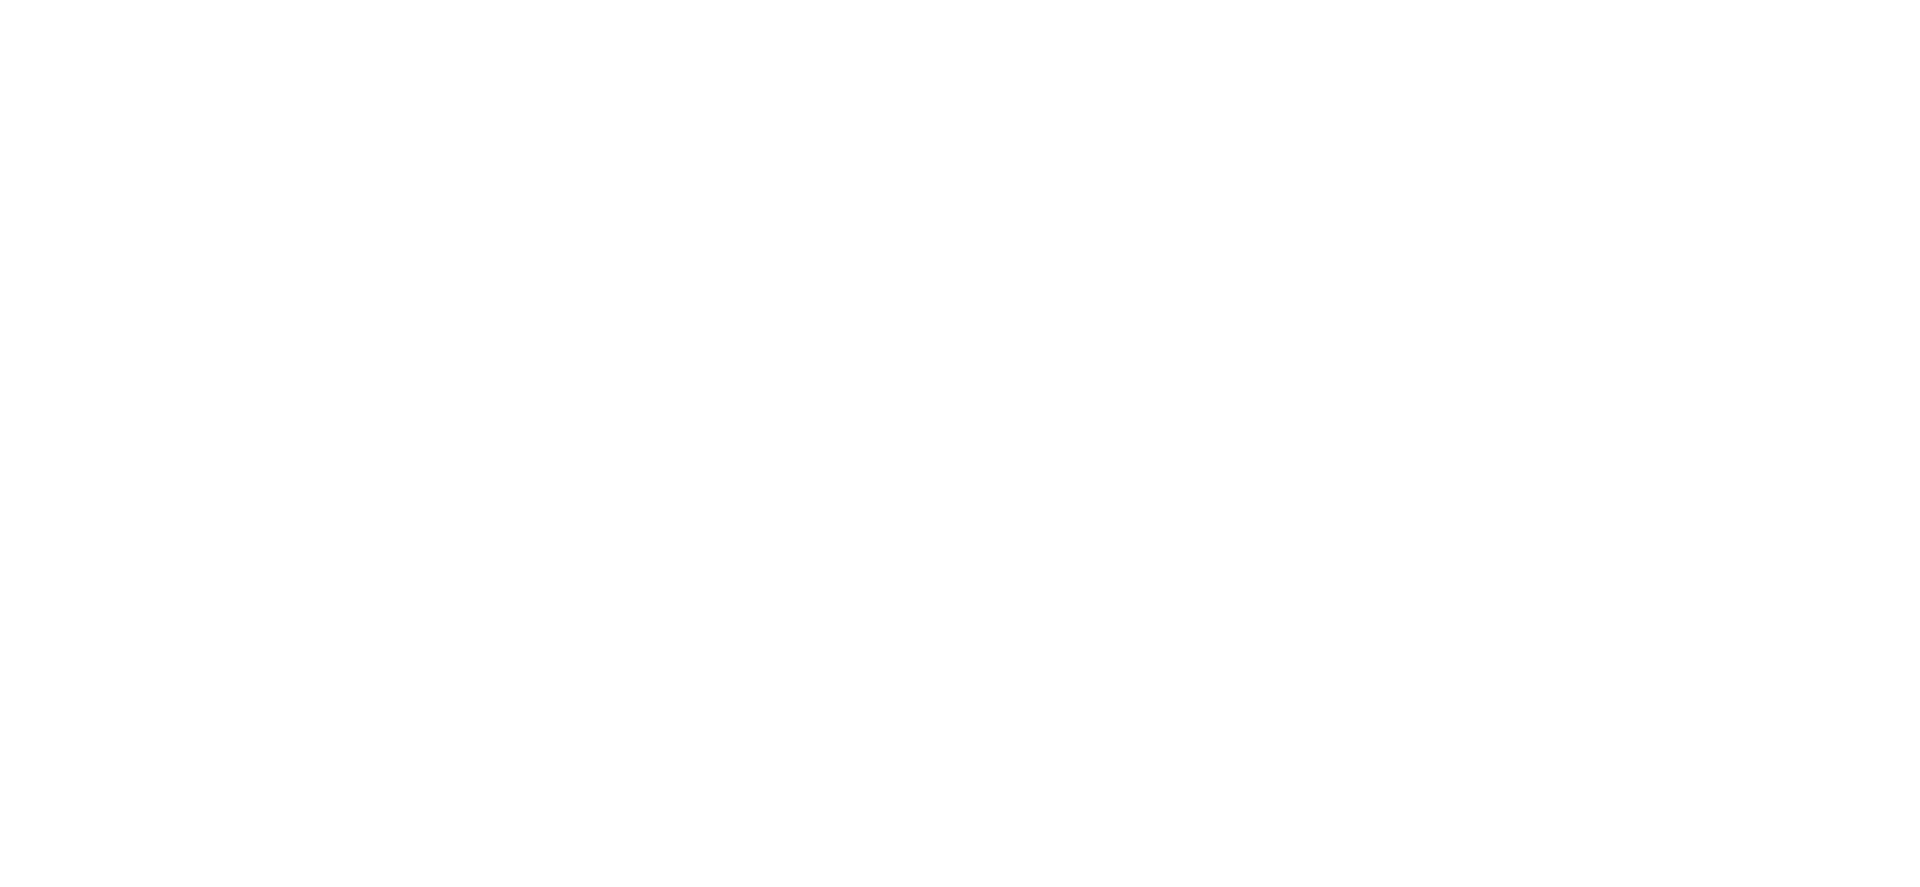 Deerfield Estates on Delaware